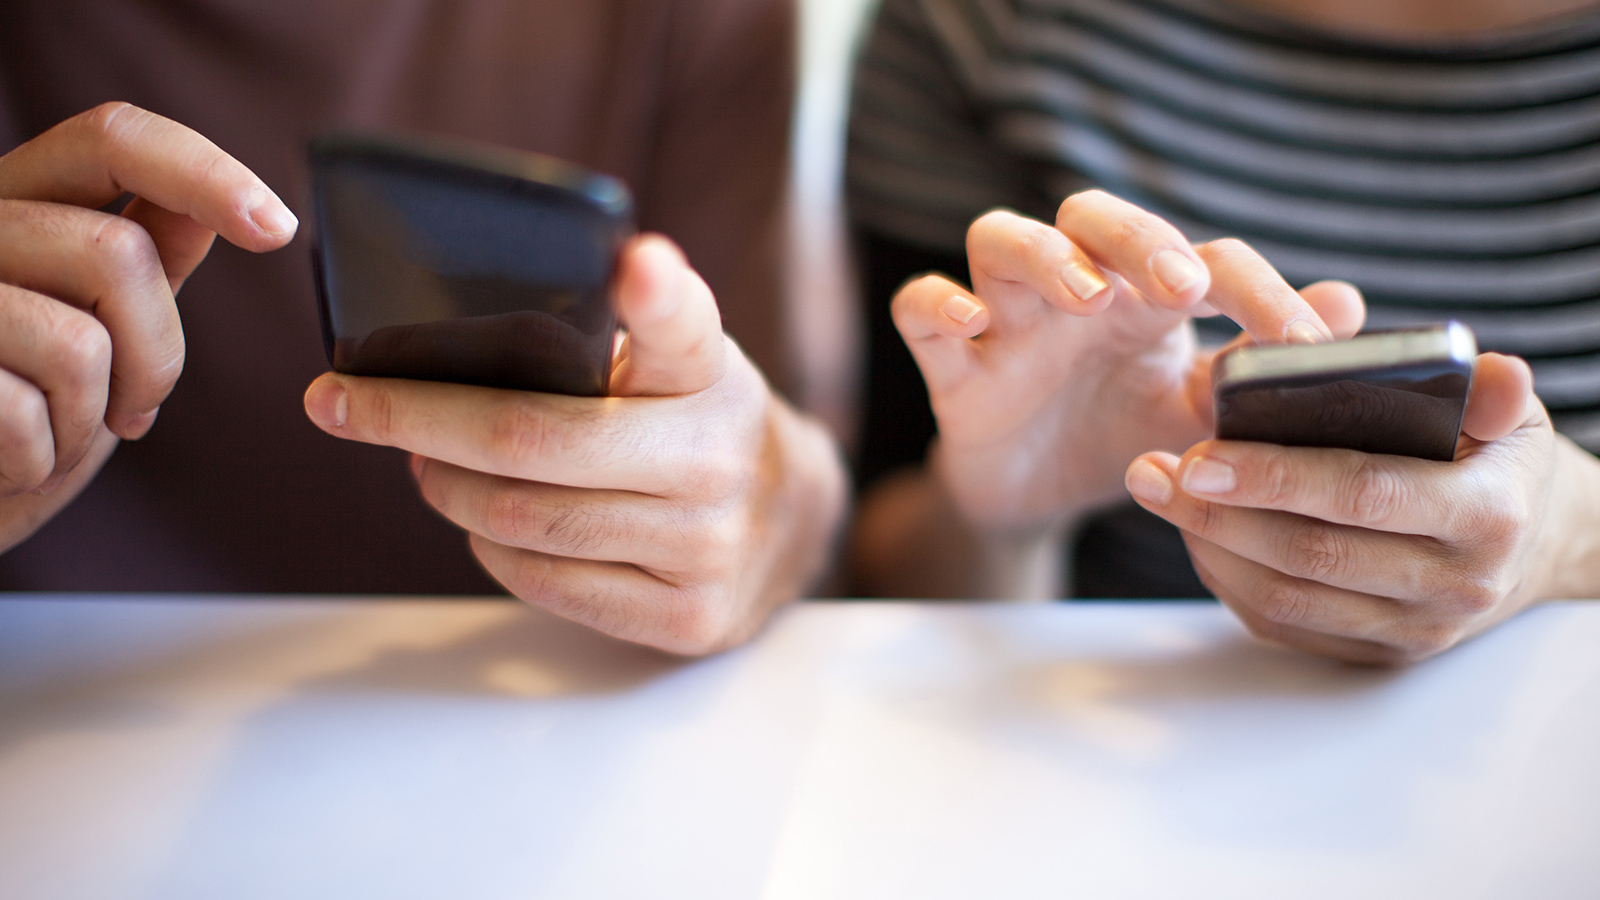 Two people using responsive websites on smartphones